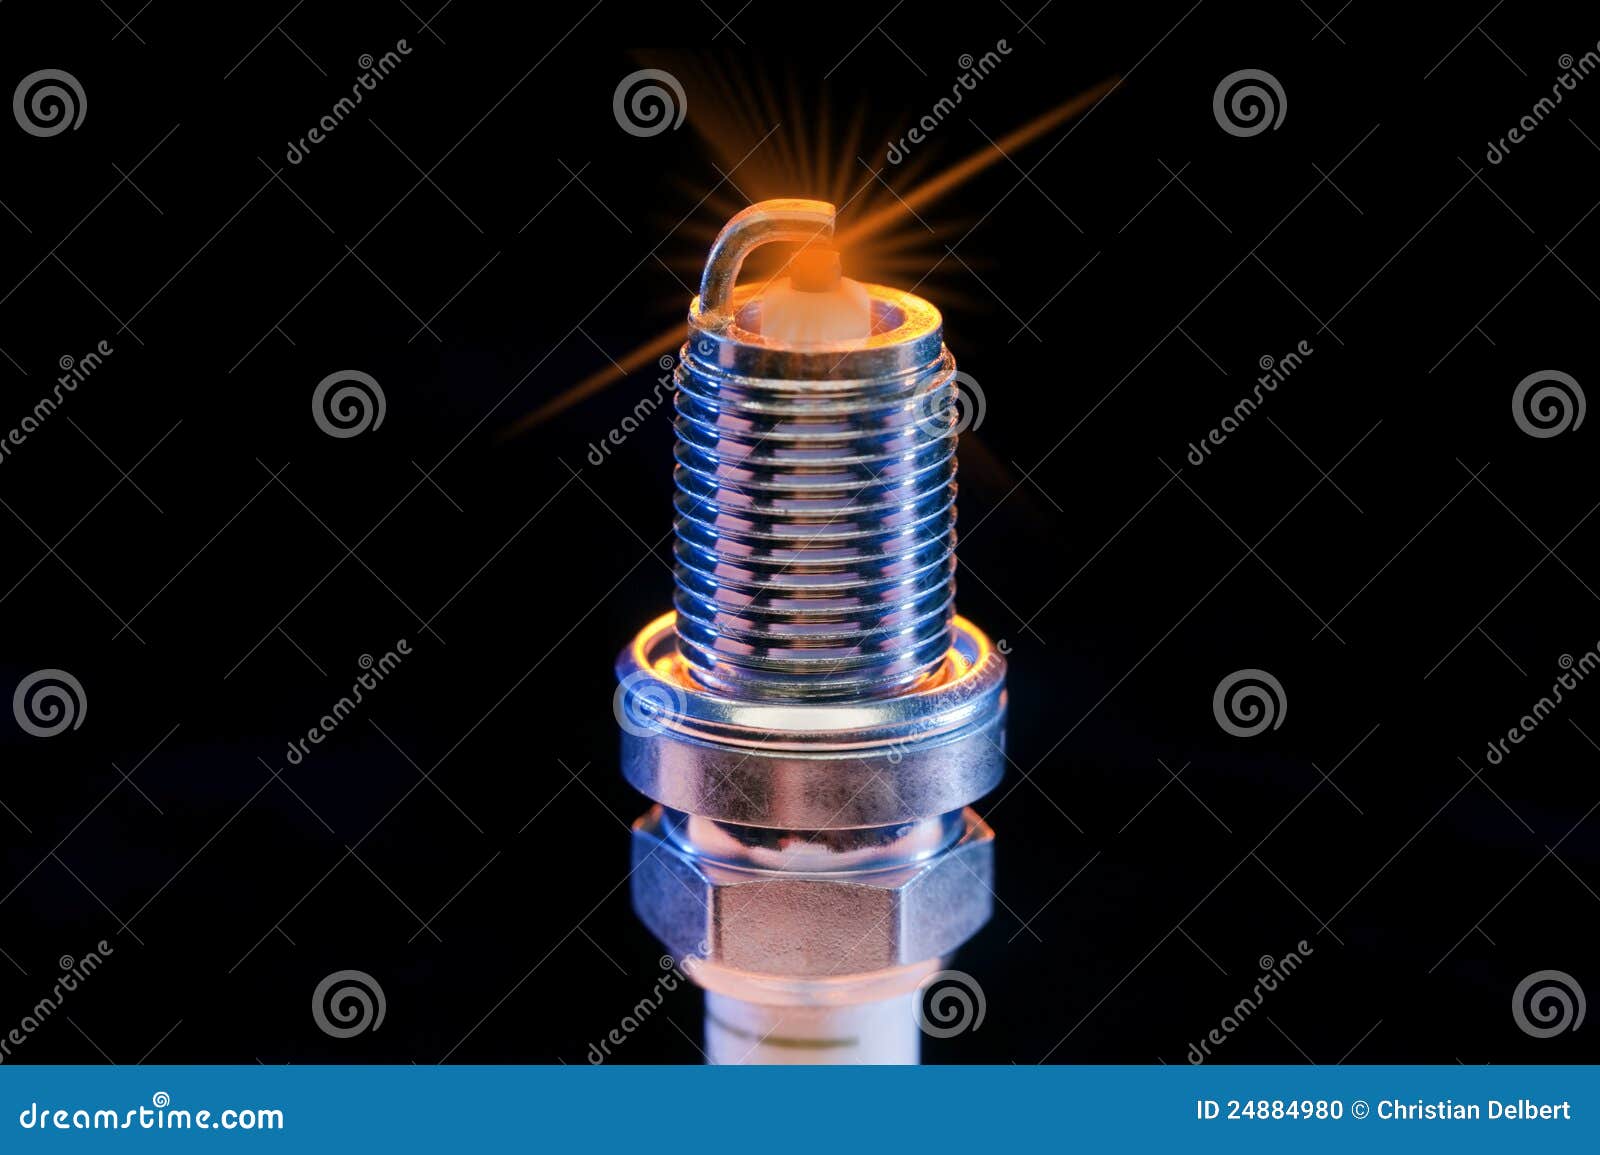 spark plug